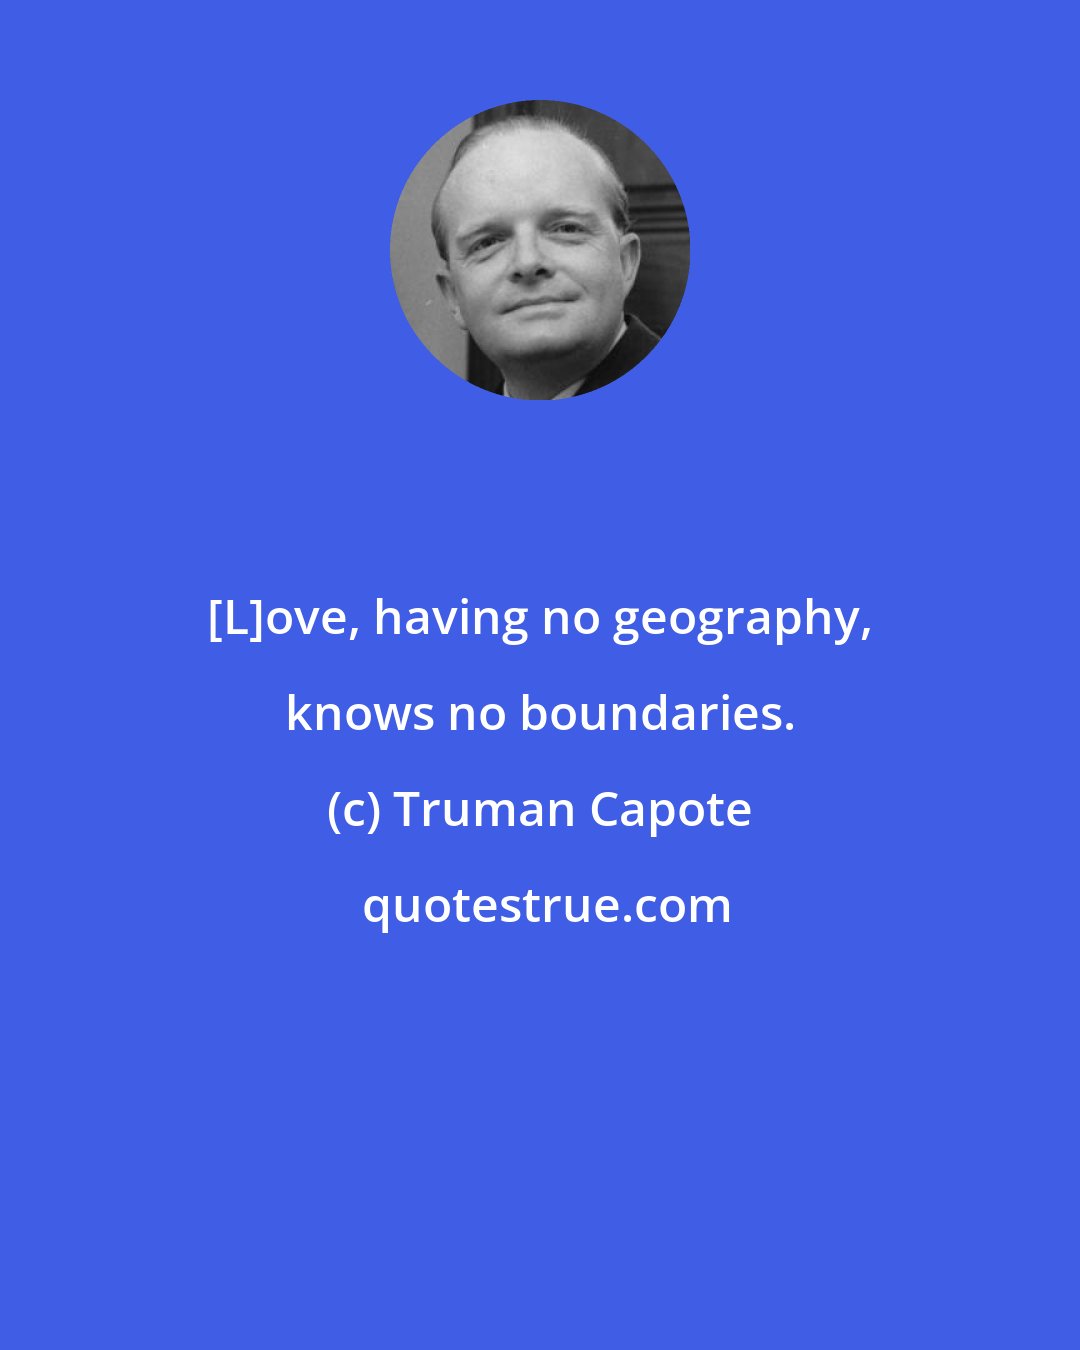 Truman Capote: [L]ove, having no geography, knows no boundaries.